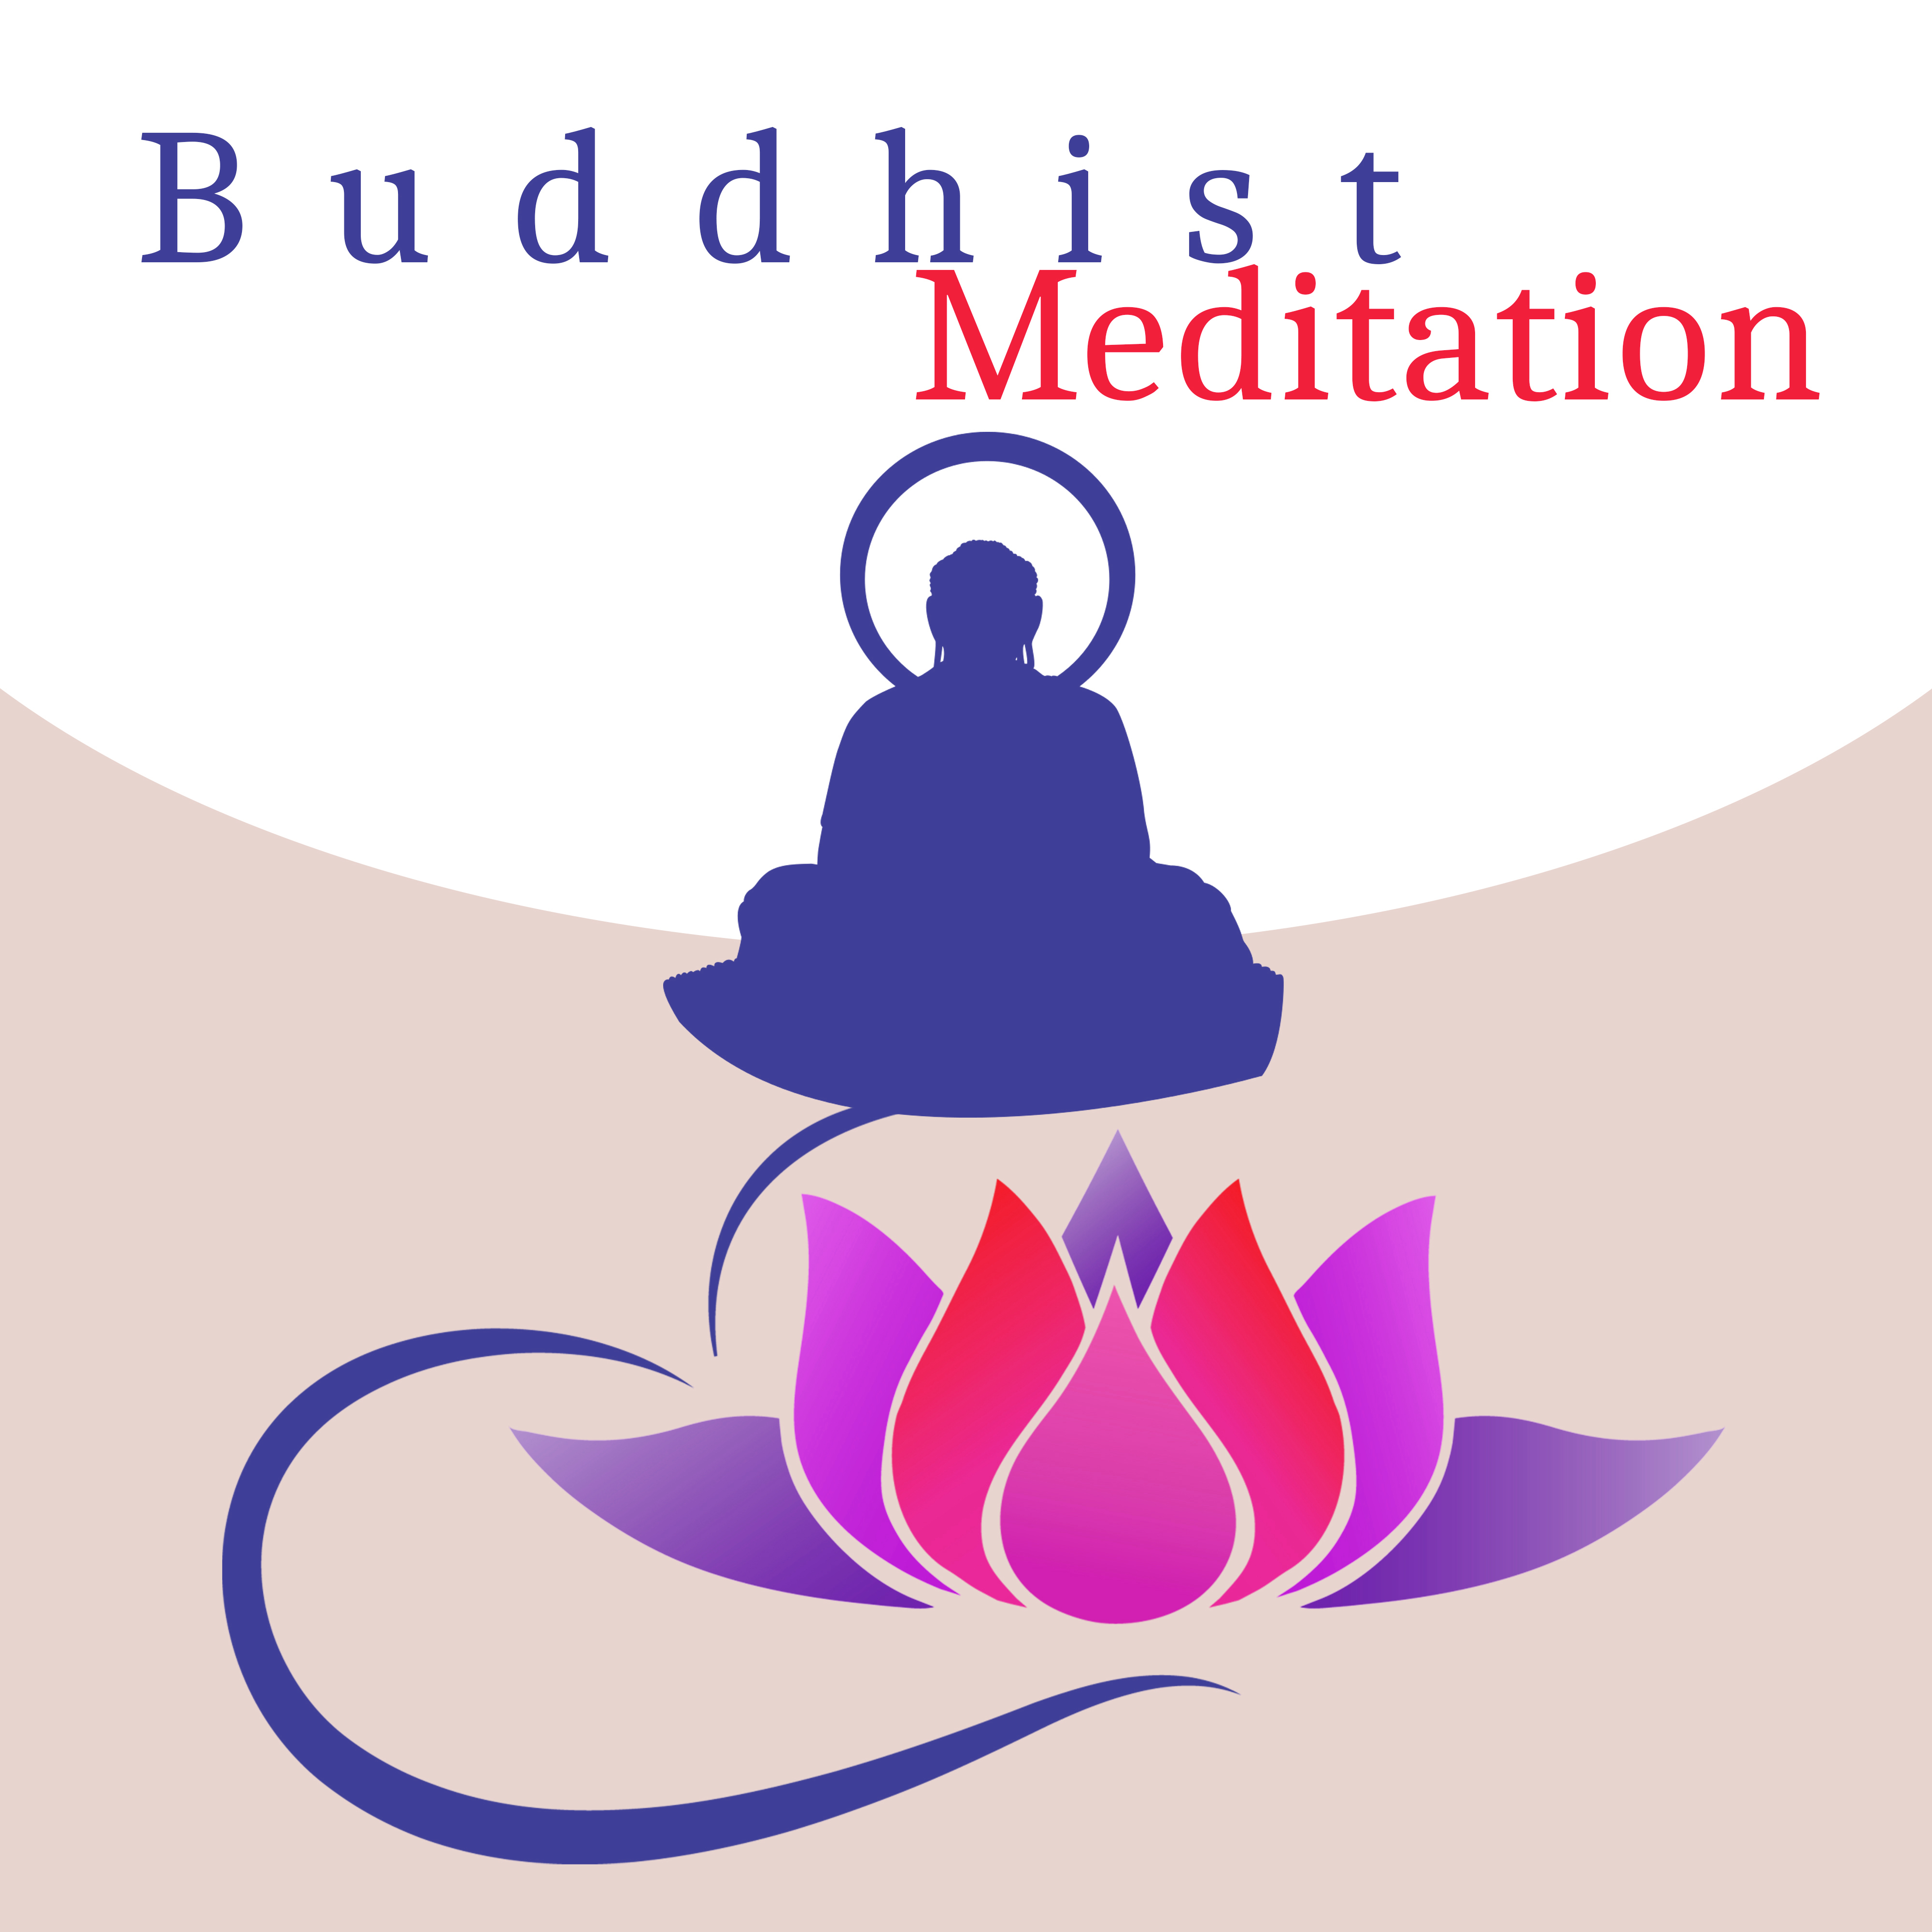 Buddhist Meditation – Relief, Training Yoga, Reiki, Zen, Tibetan Music, Peaceful Mind, Better Concentration